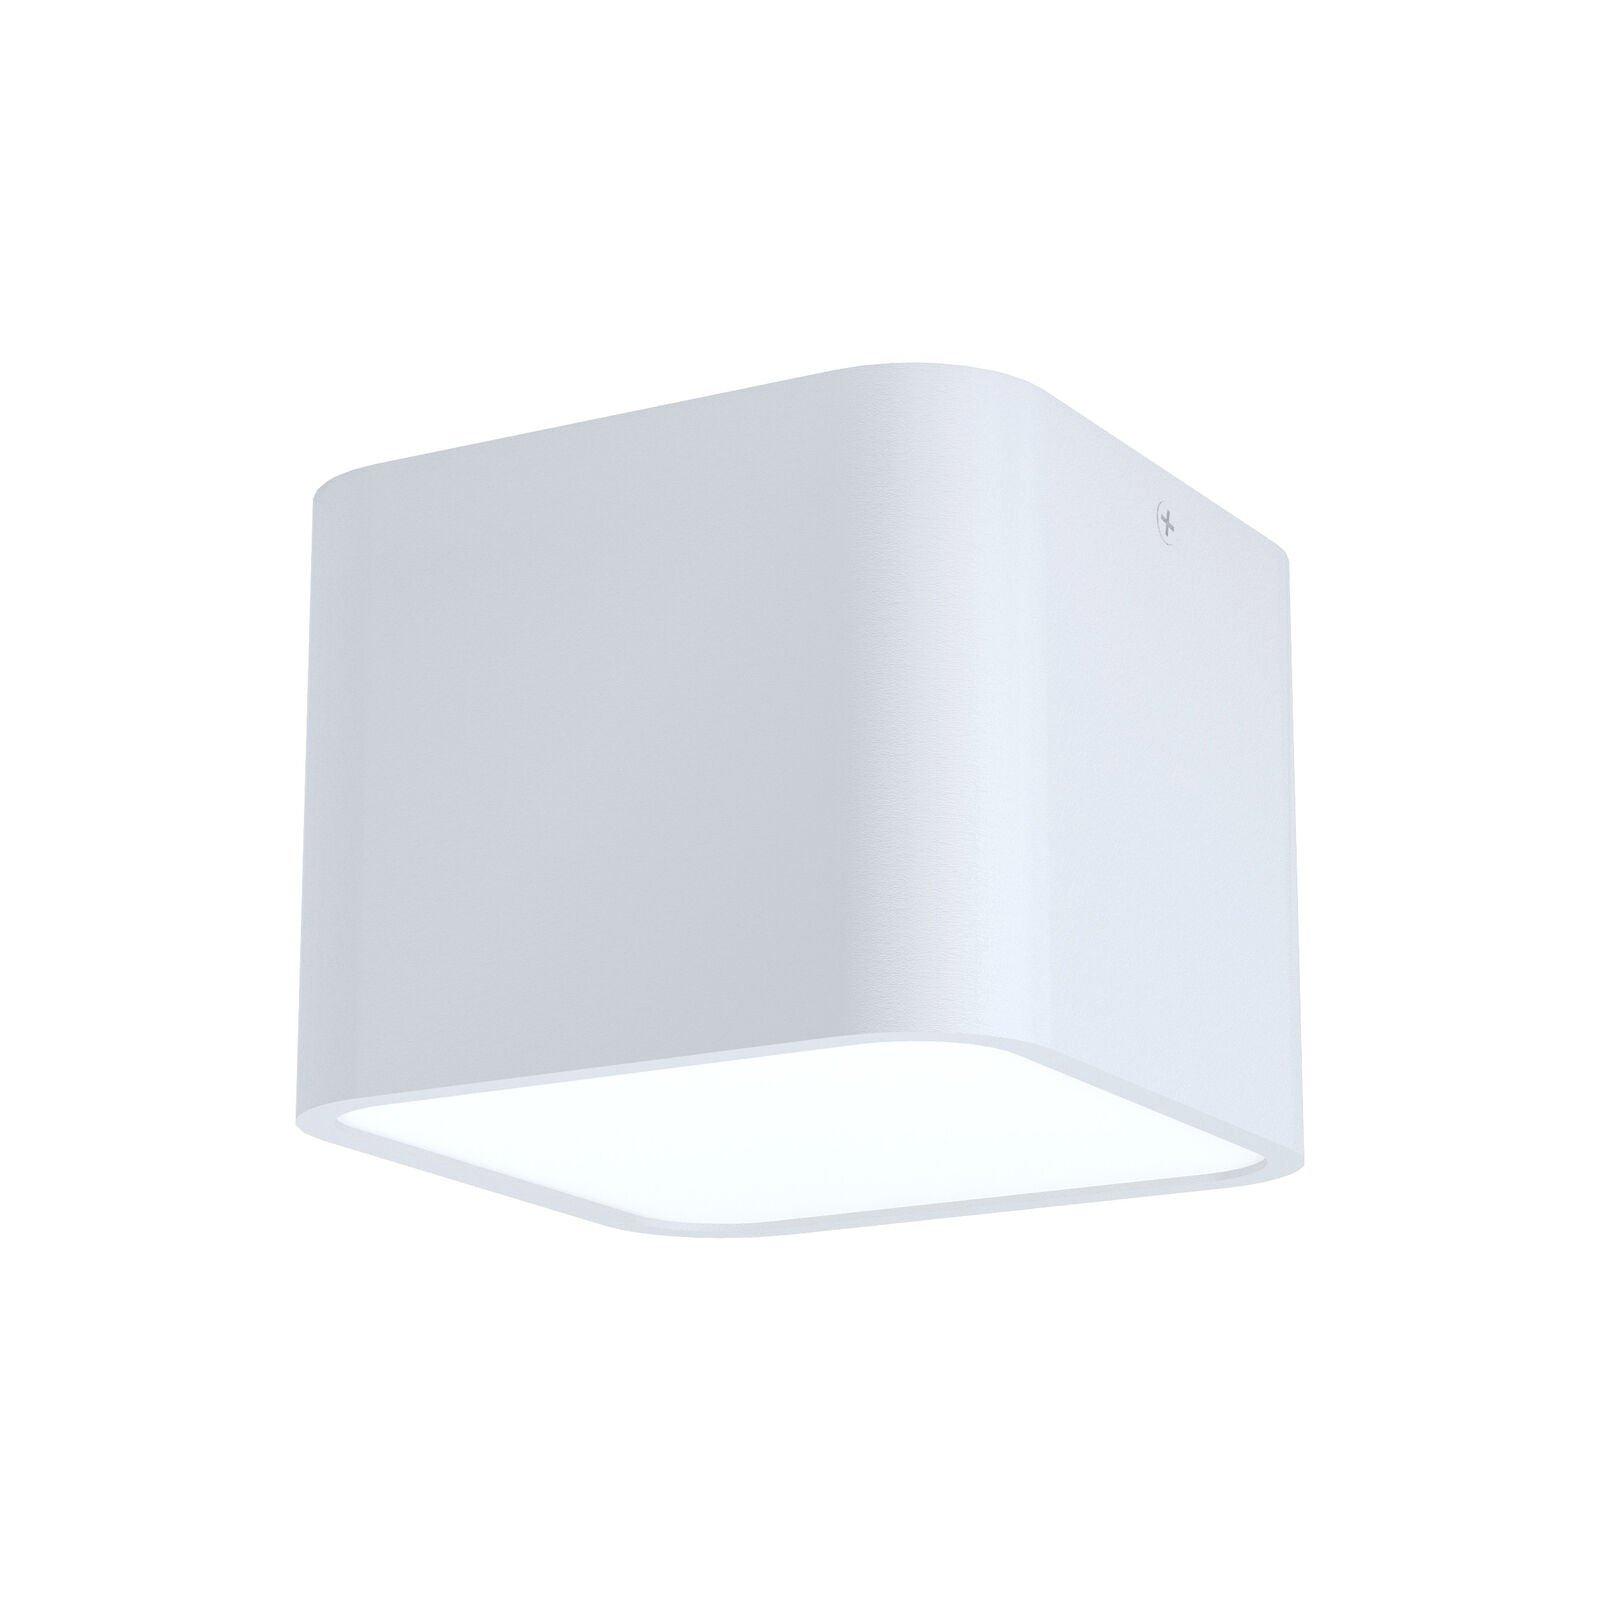 Wall / Ceiling Light White Aluminium Square Downlight 1 x 28W E27 Bulb